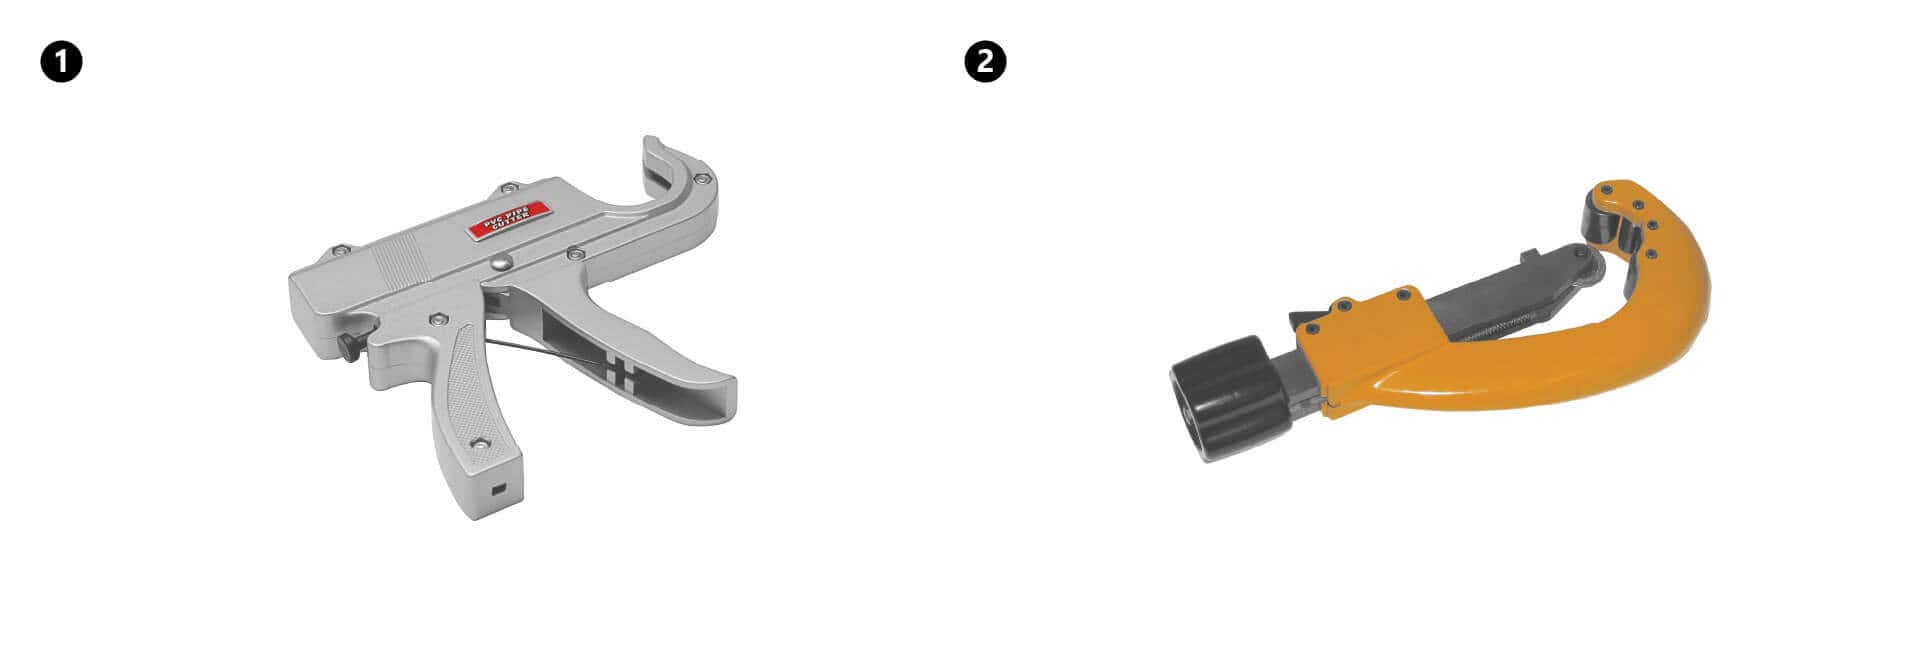 KAN-therm – Systém ultraPRESS – Fotografie pištoľových nožníc pre priemery rúrok 14-32 mm a kruhových nožníc pre priemery 16-63 mm.